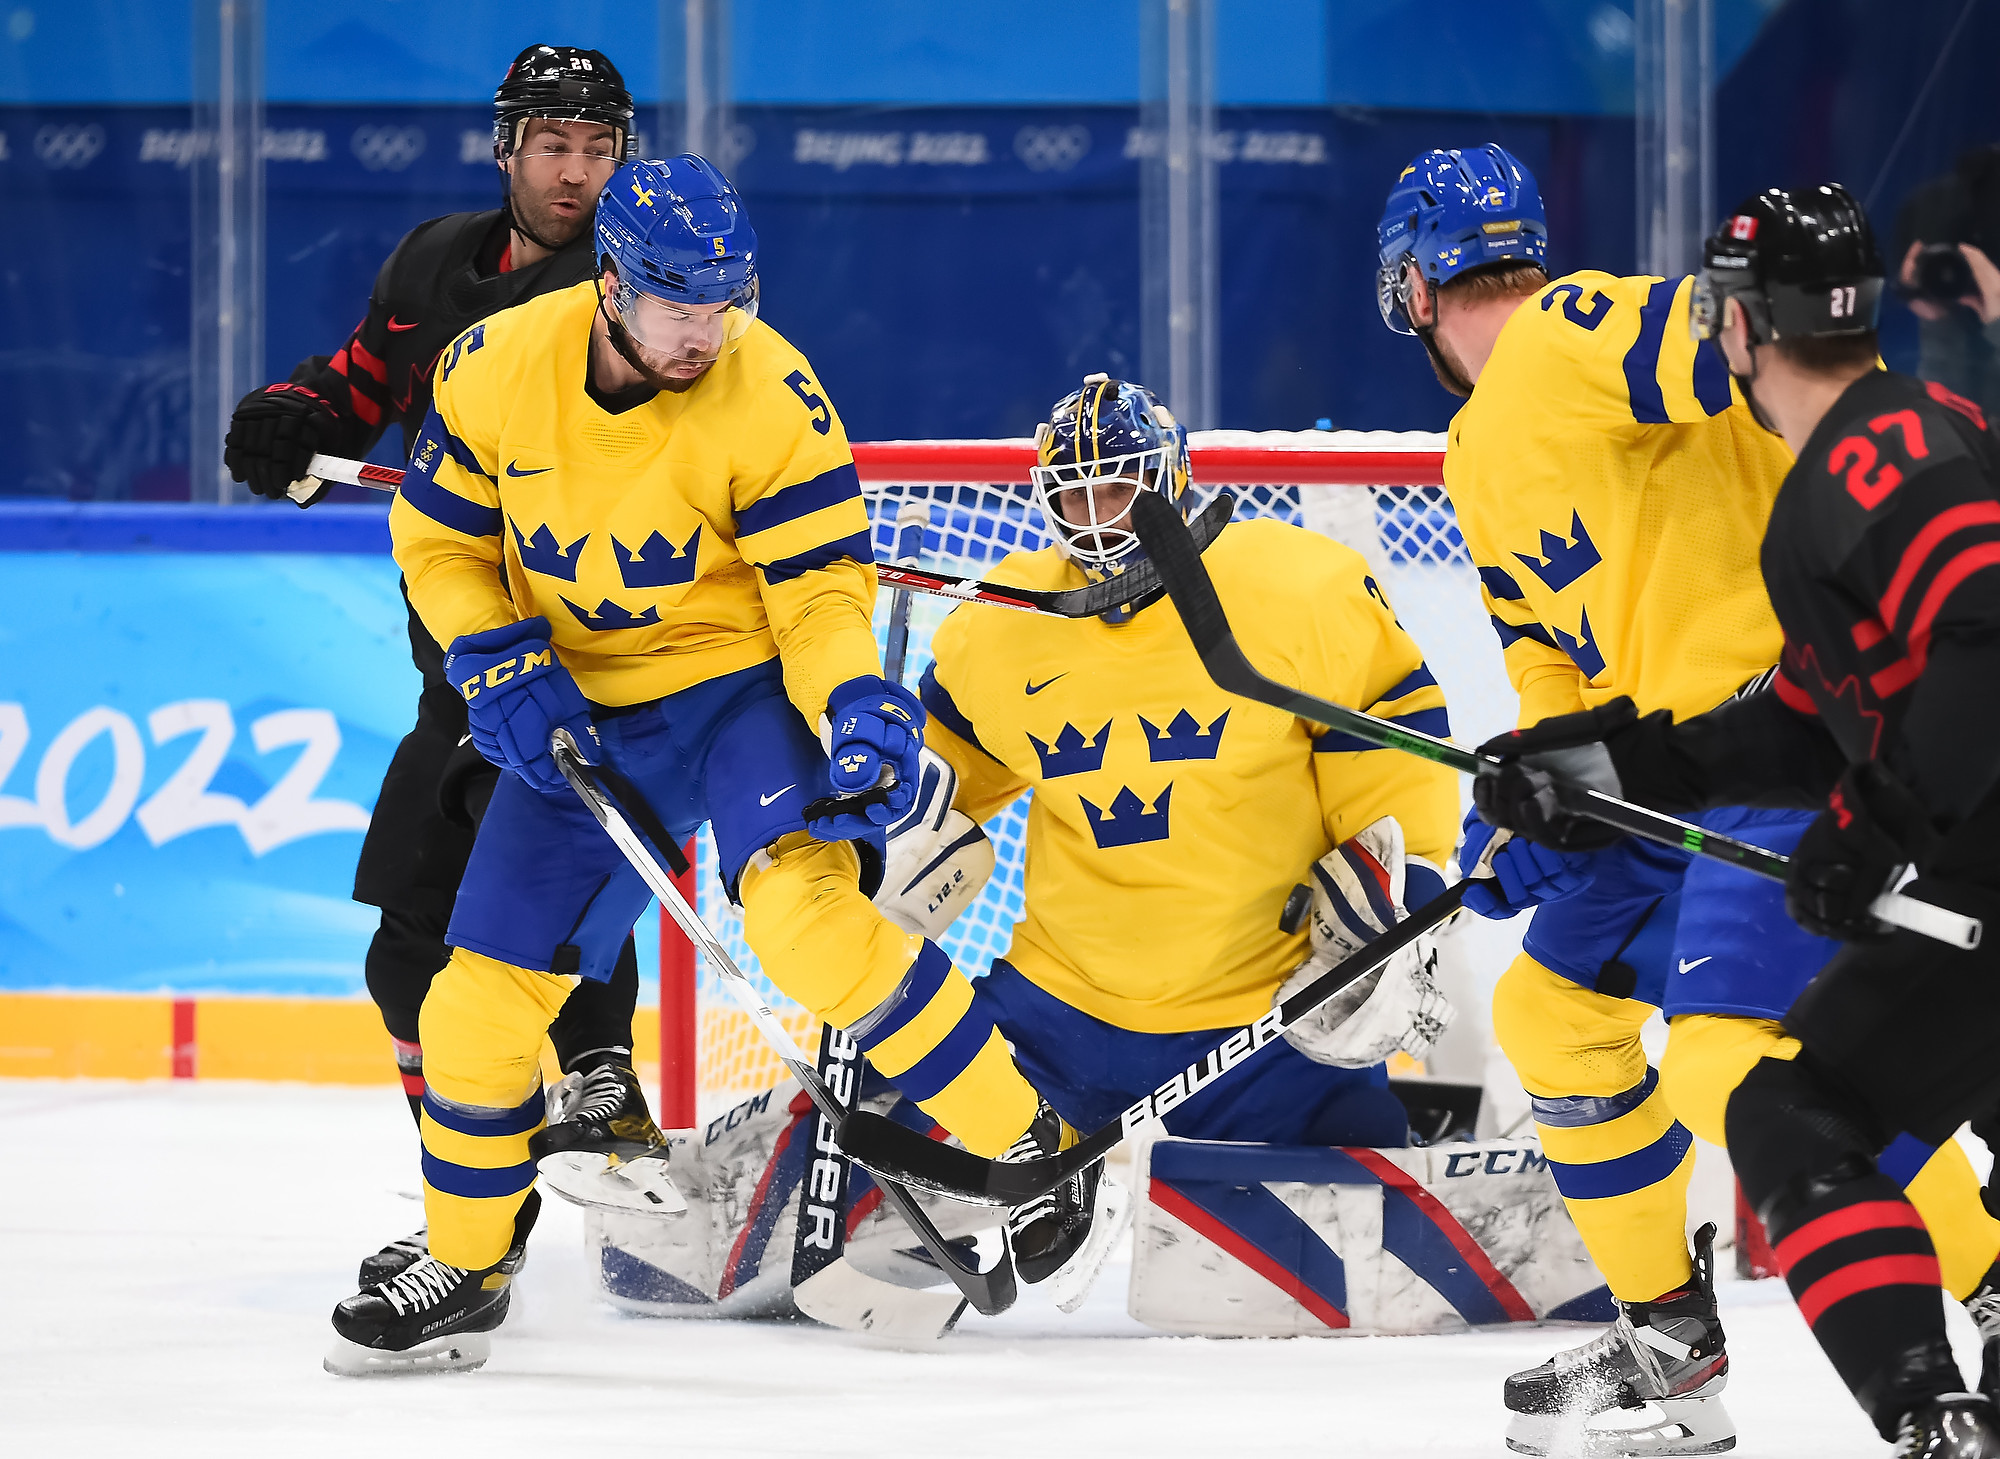 IIHF - Gallery: Sweden vs Canada (QF) - 2022 Olympic Men's Ice Hockey